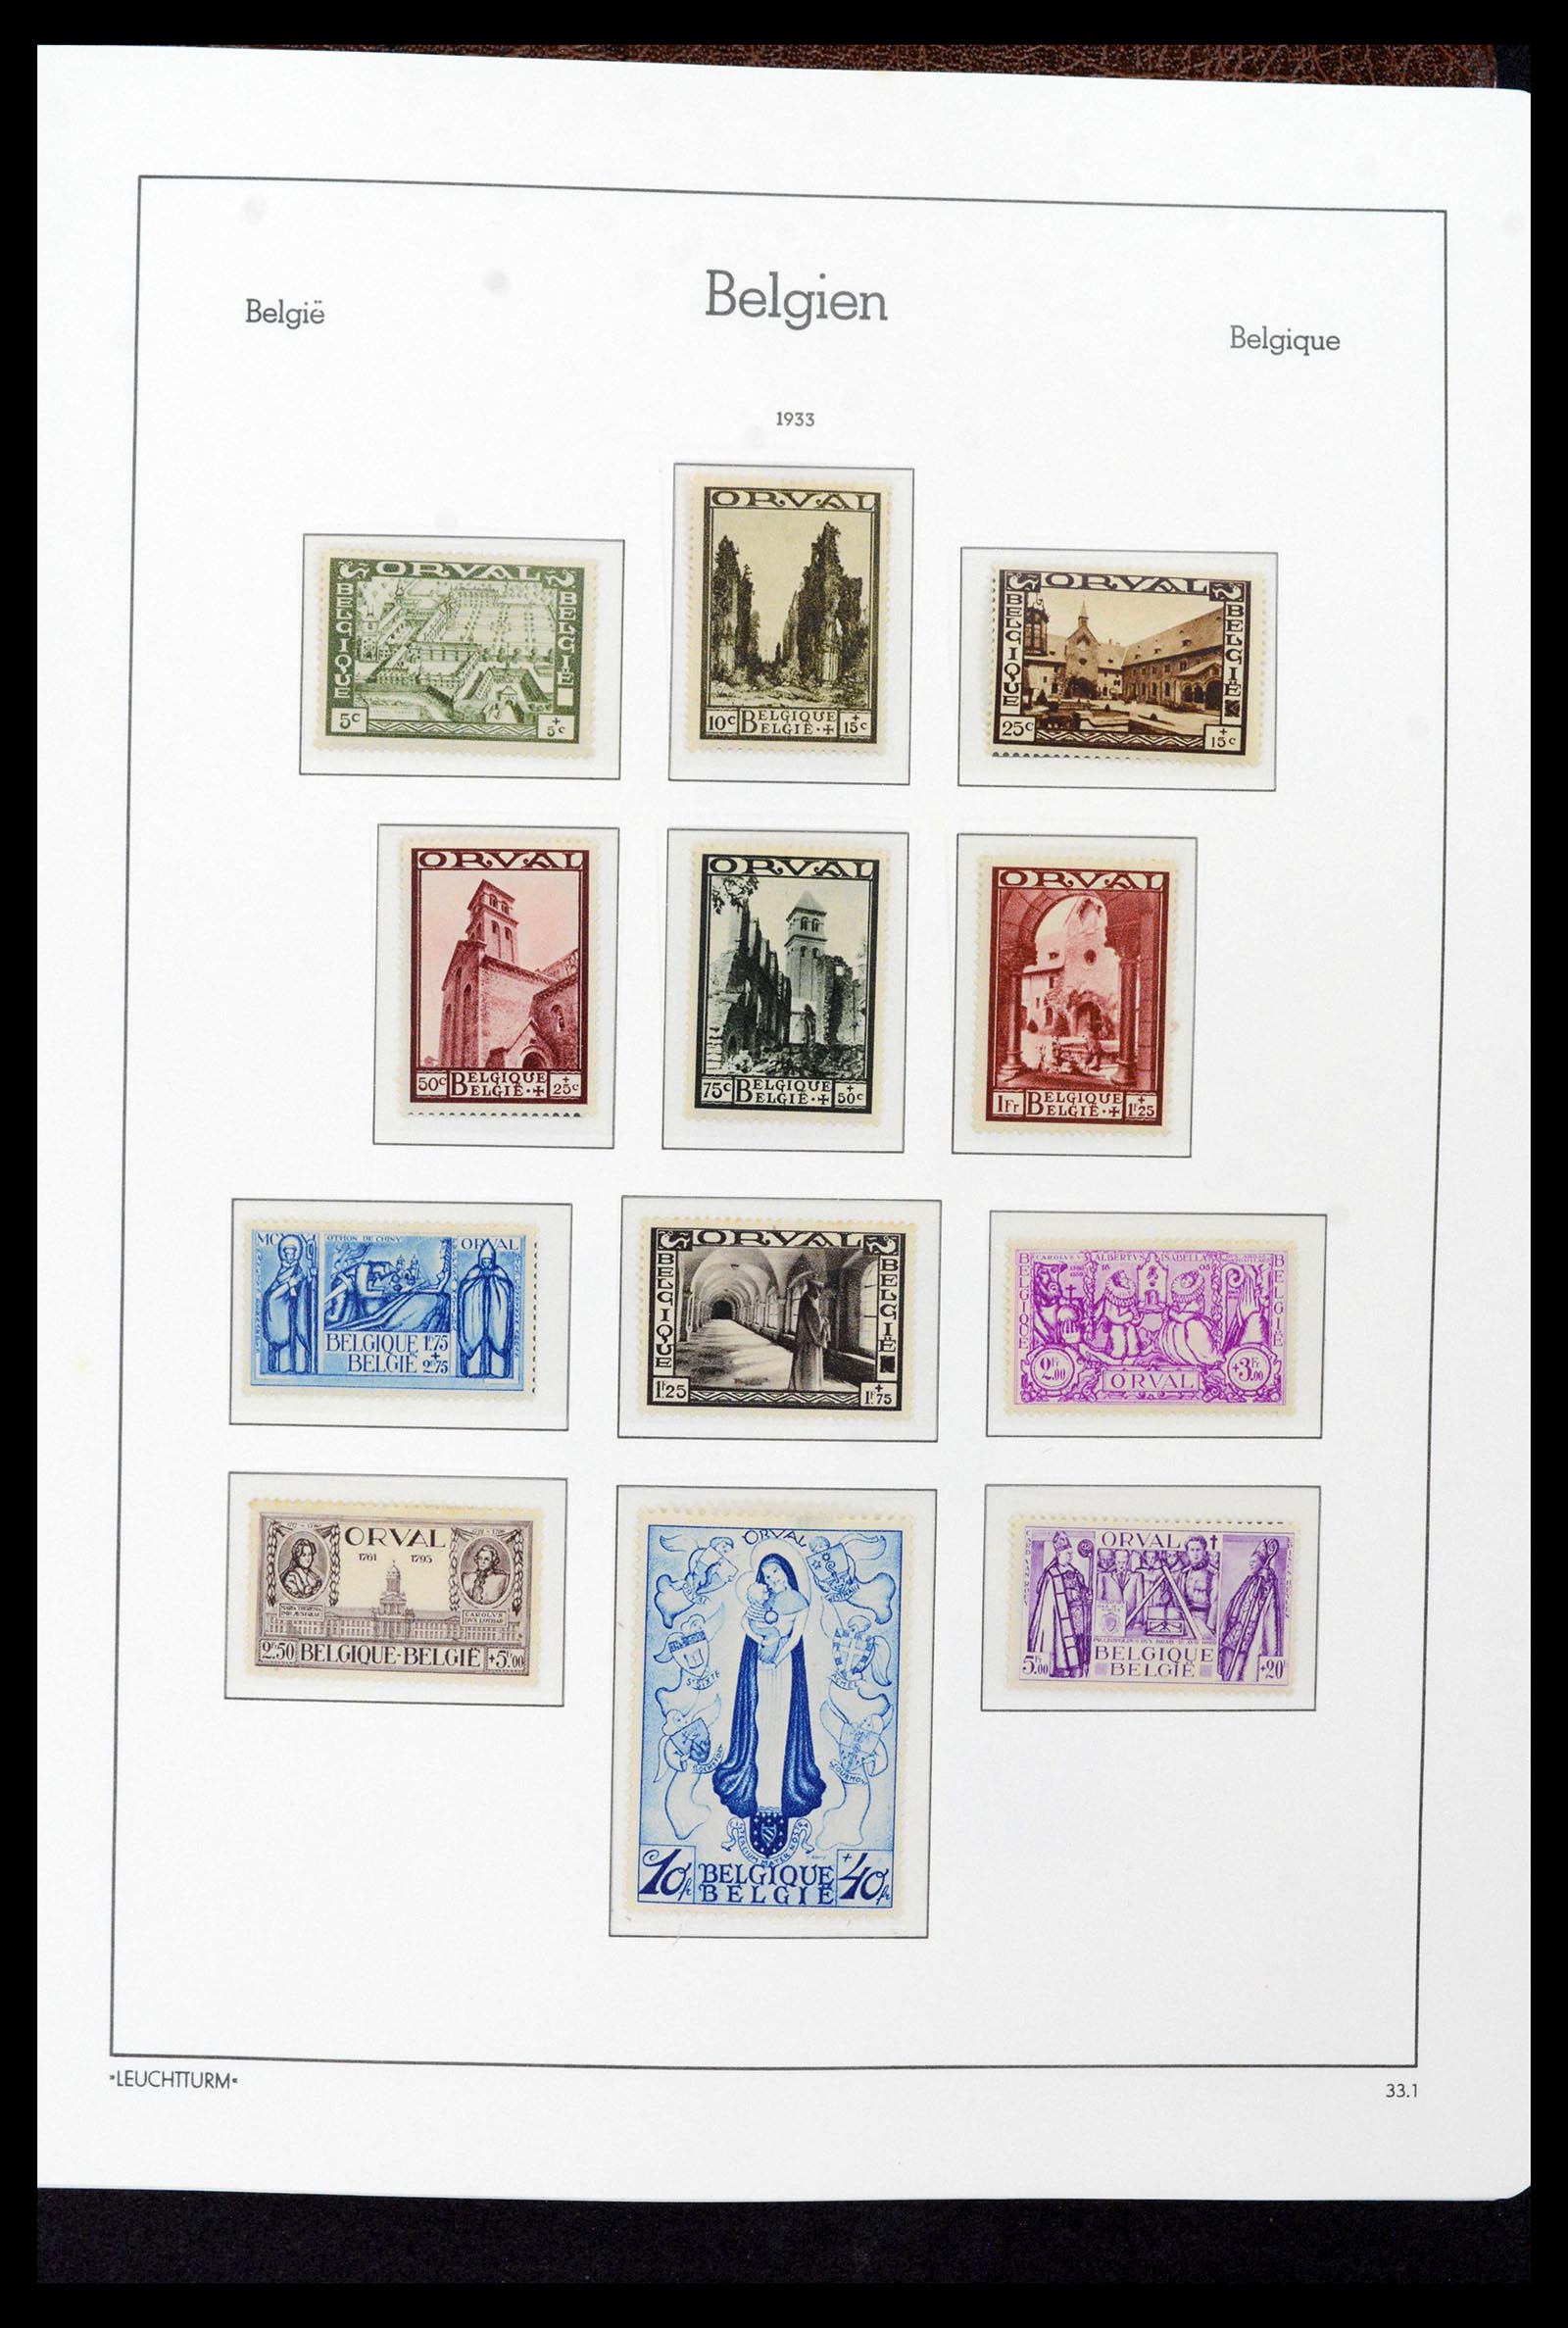 39137 0049 - Stamp collection 39137 Belgium 1849-2002.